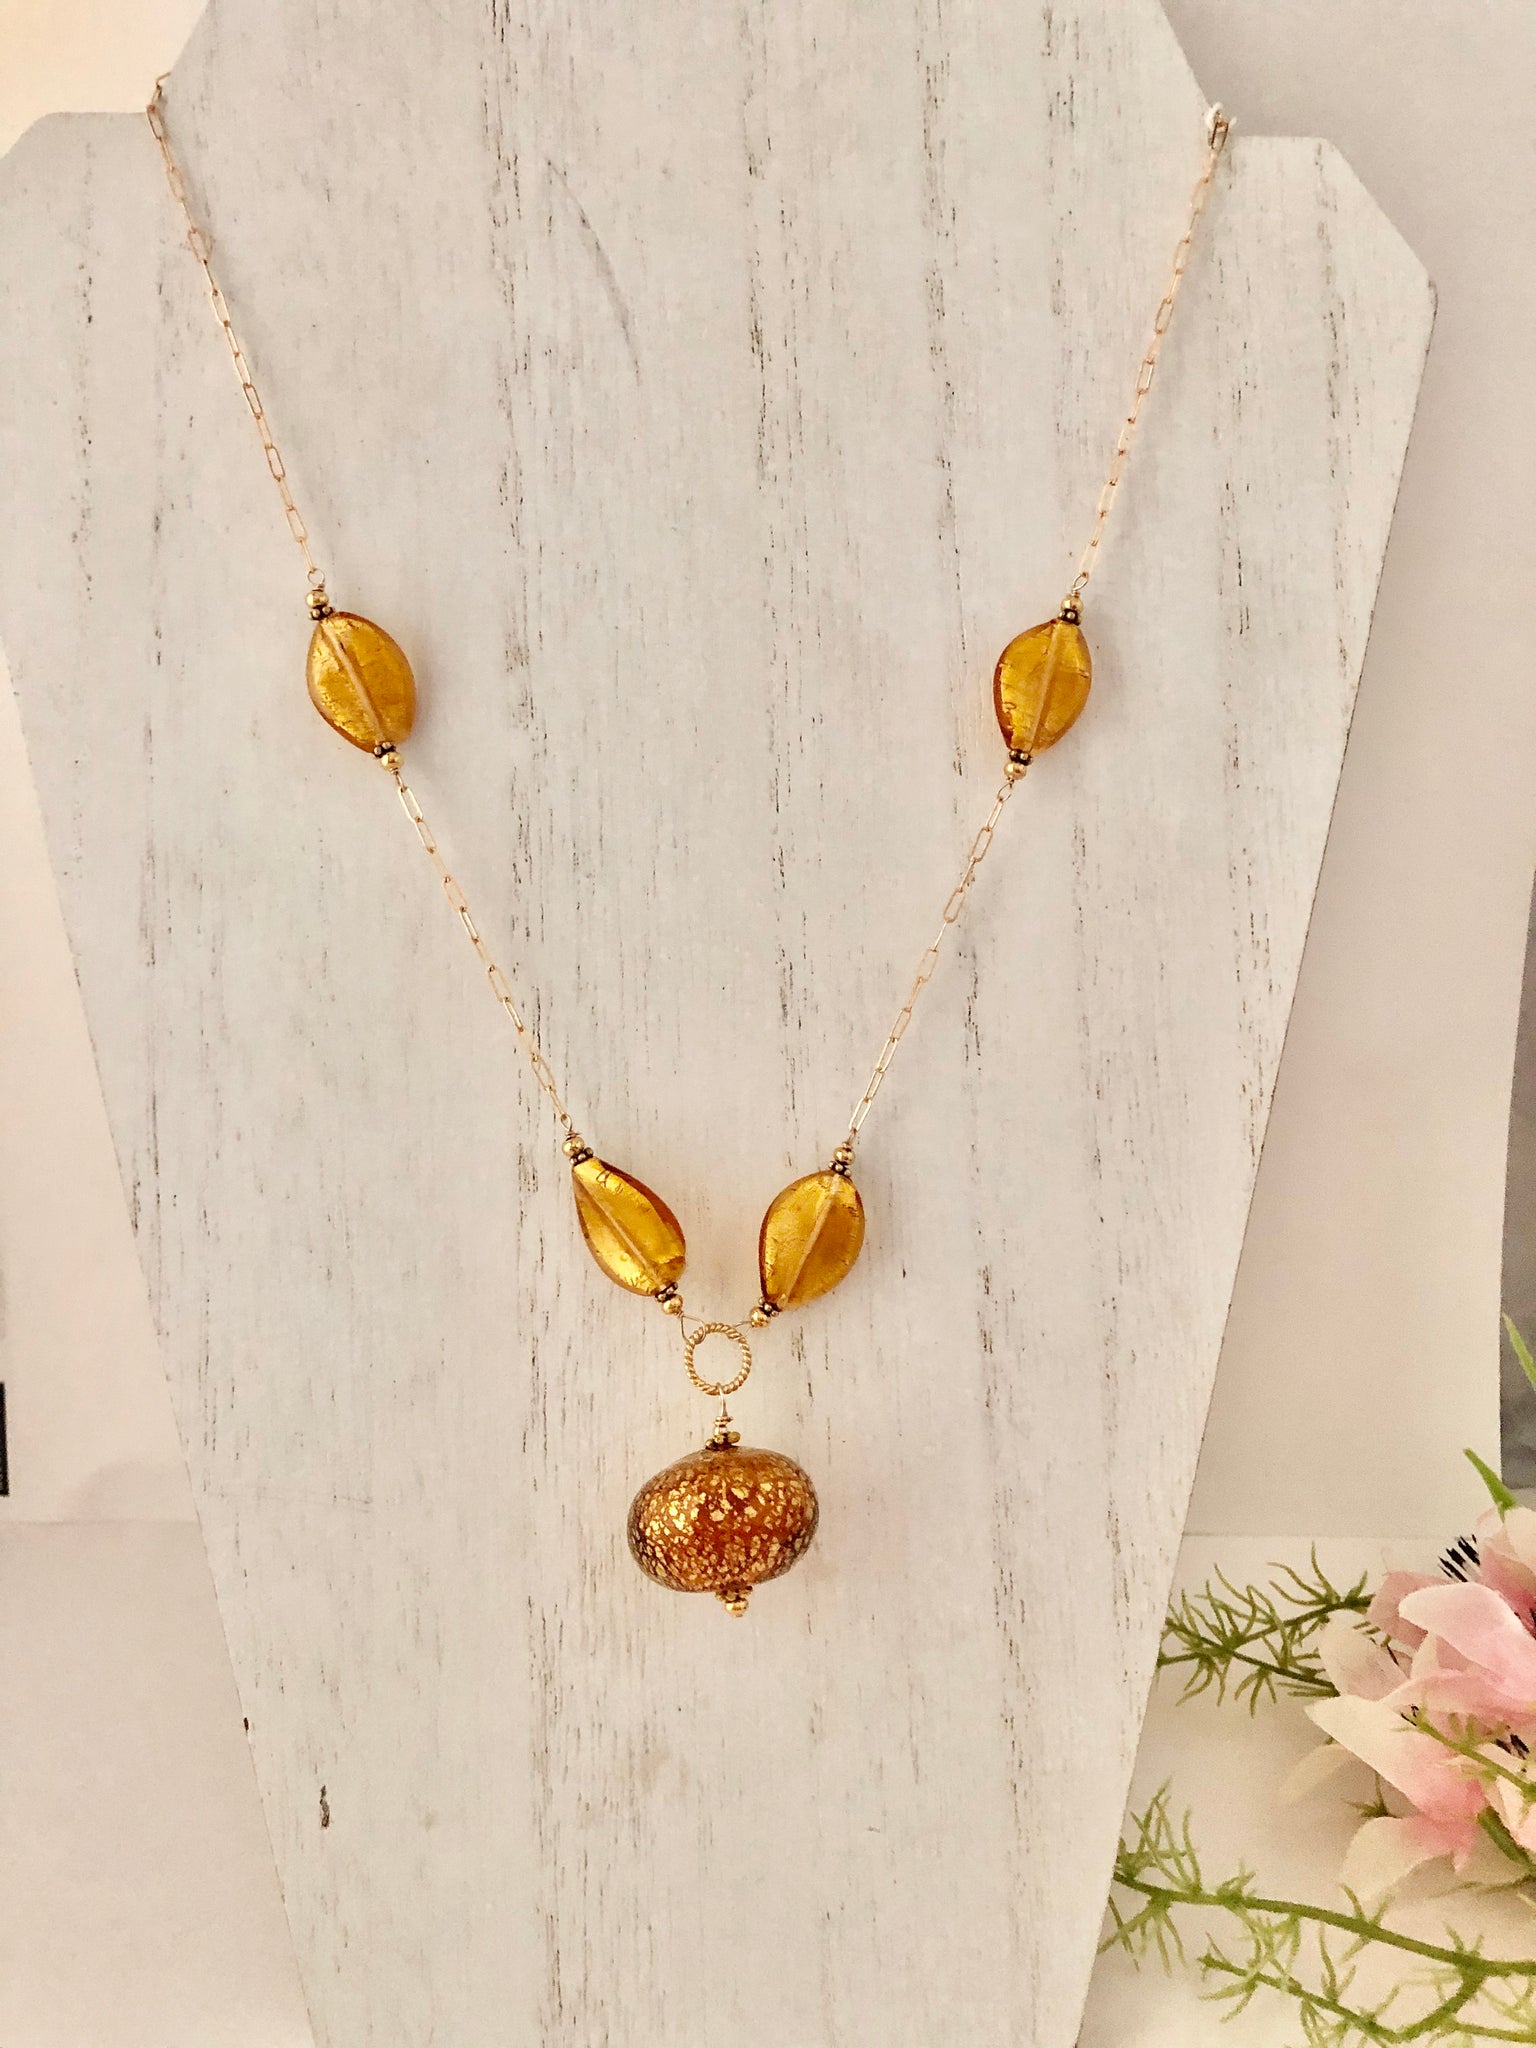 Necklace with sea green (jade, teal) Murano glass medium heart pendant –  Diana Ingram